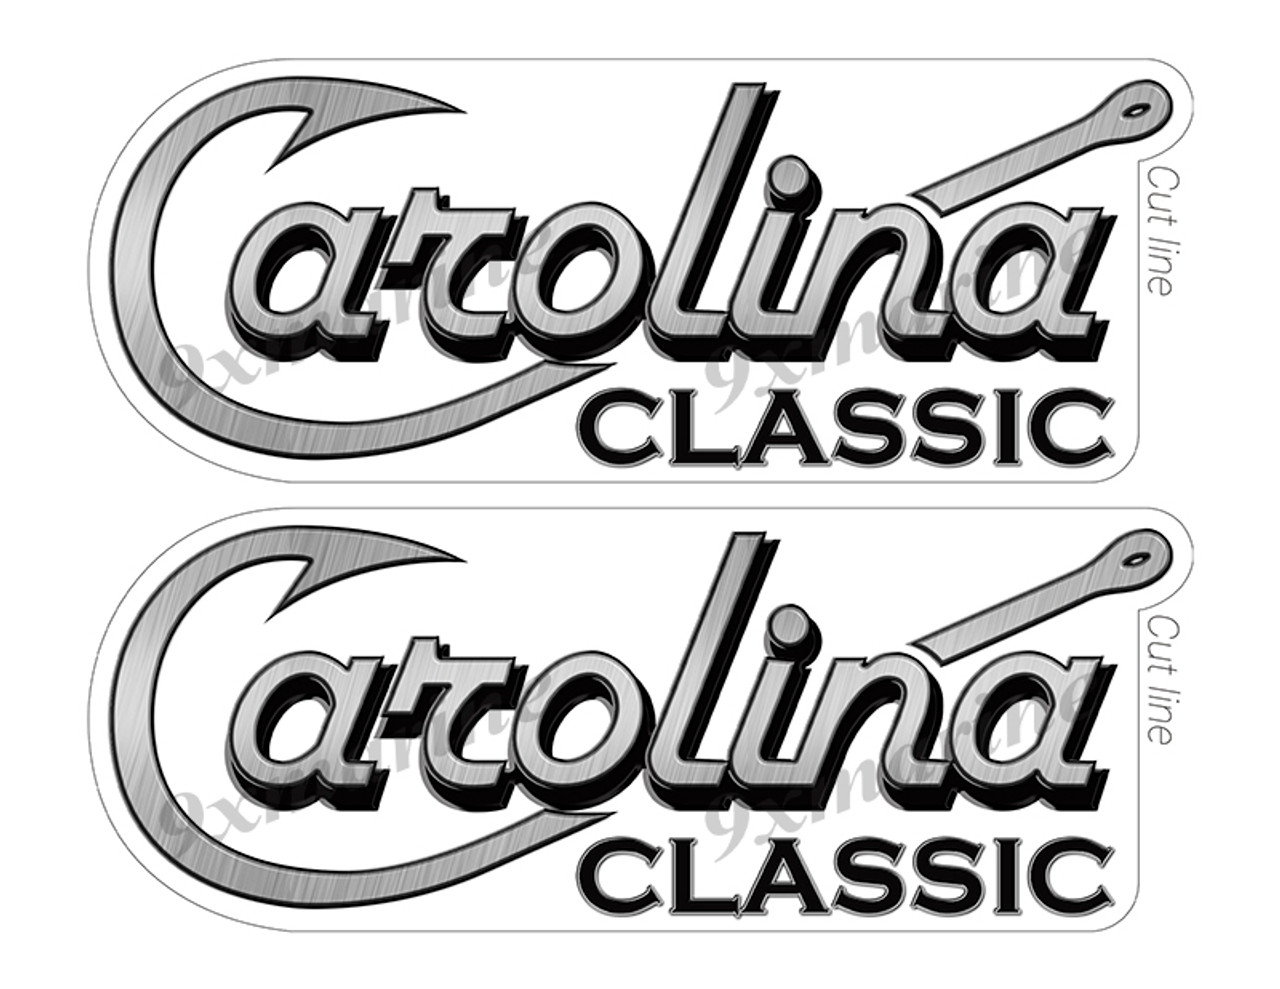 2 Carolina Boat Stickers "3D Vinyl Replica" of original